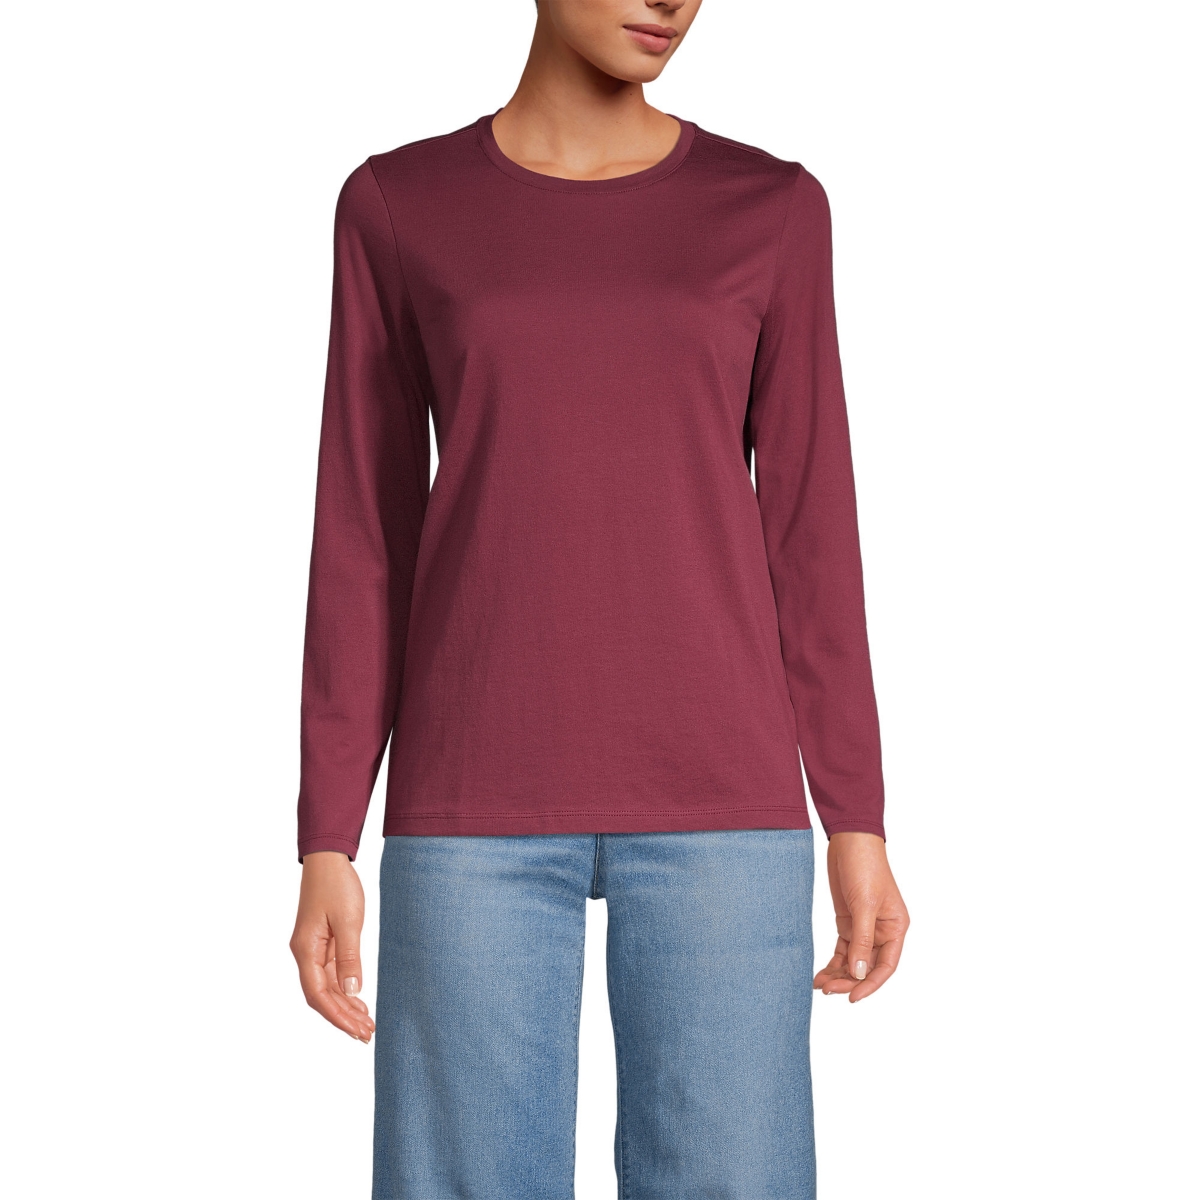 Women's Relaxed Supima Cotton Long Sleeve Crewneck T-Shirt - Rich burgundy